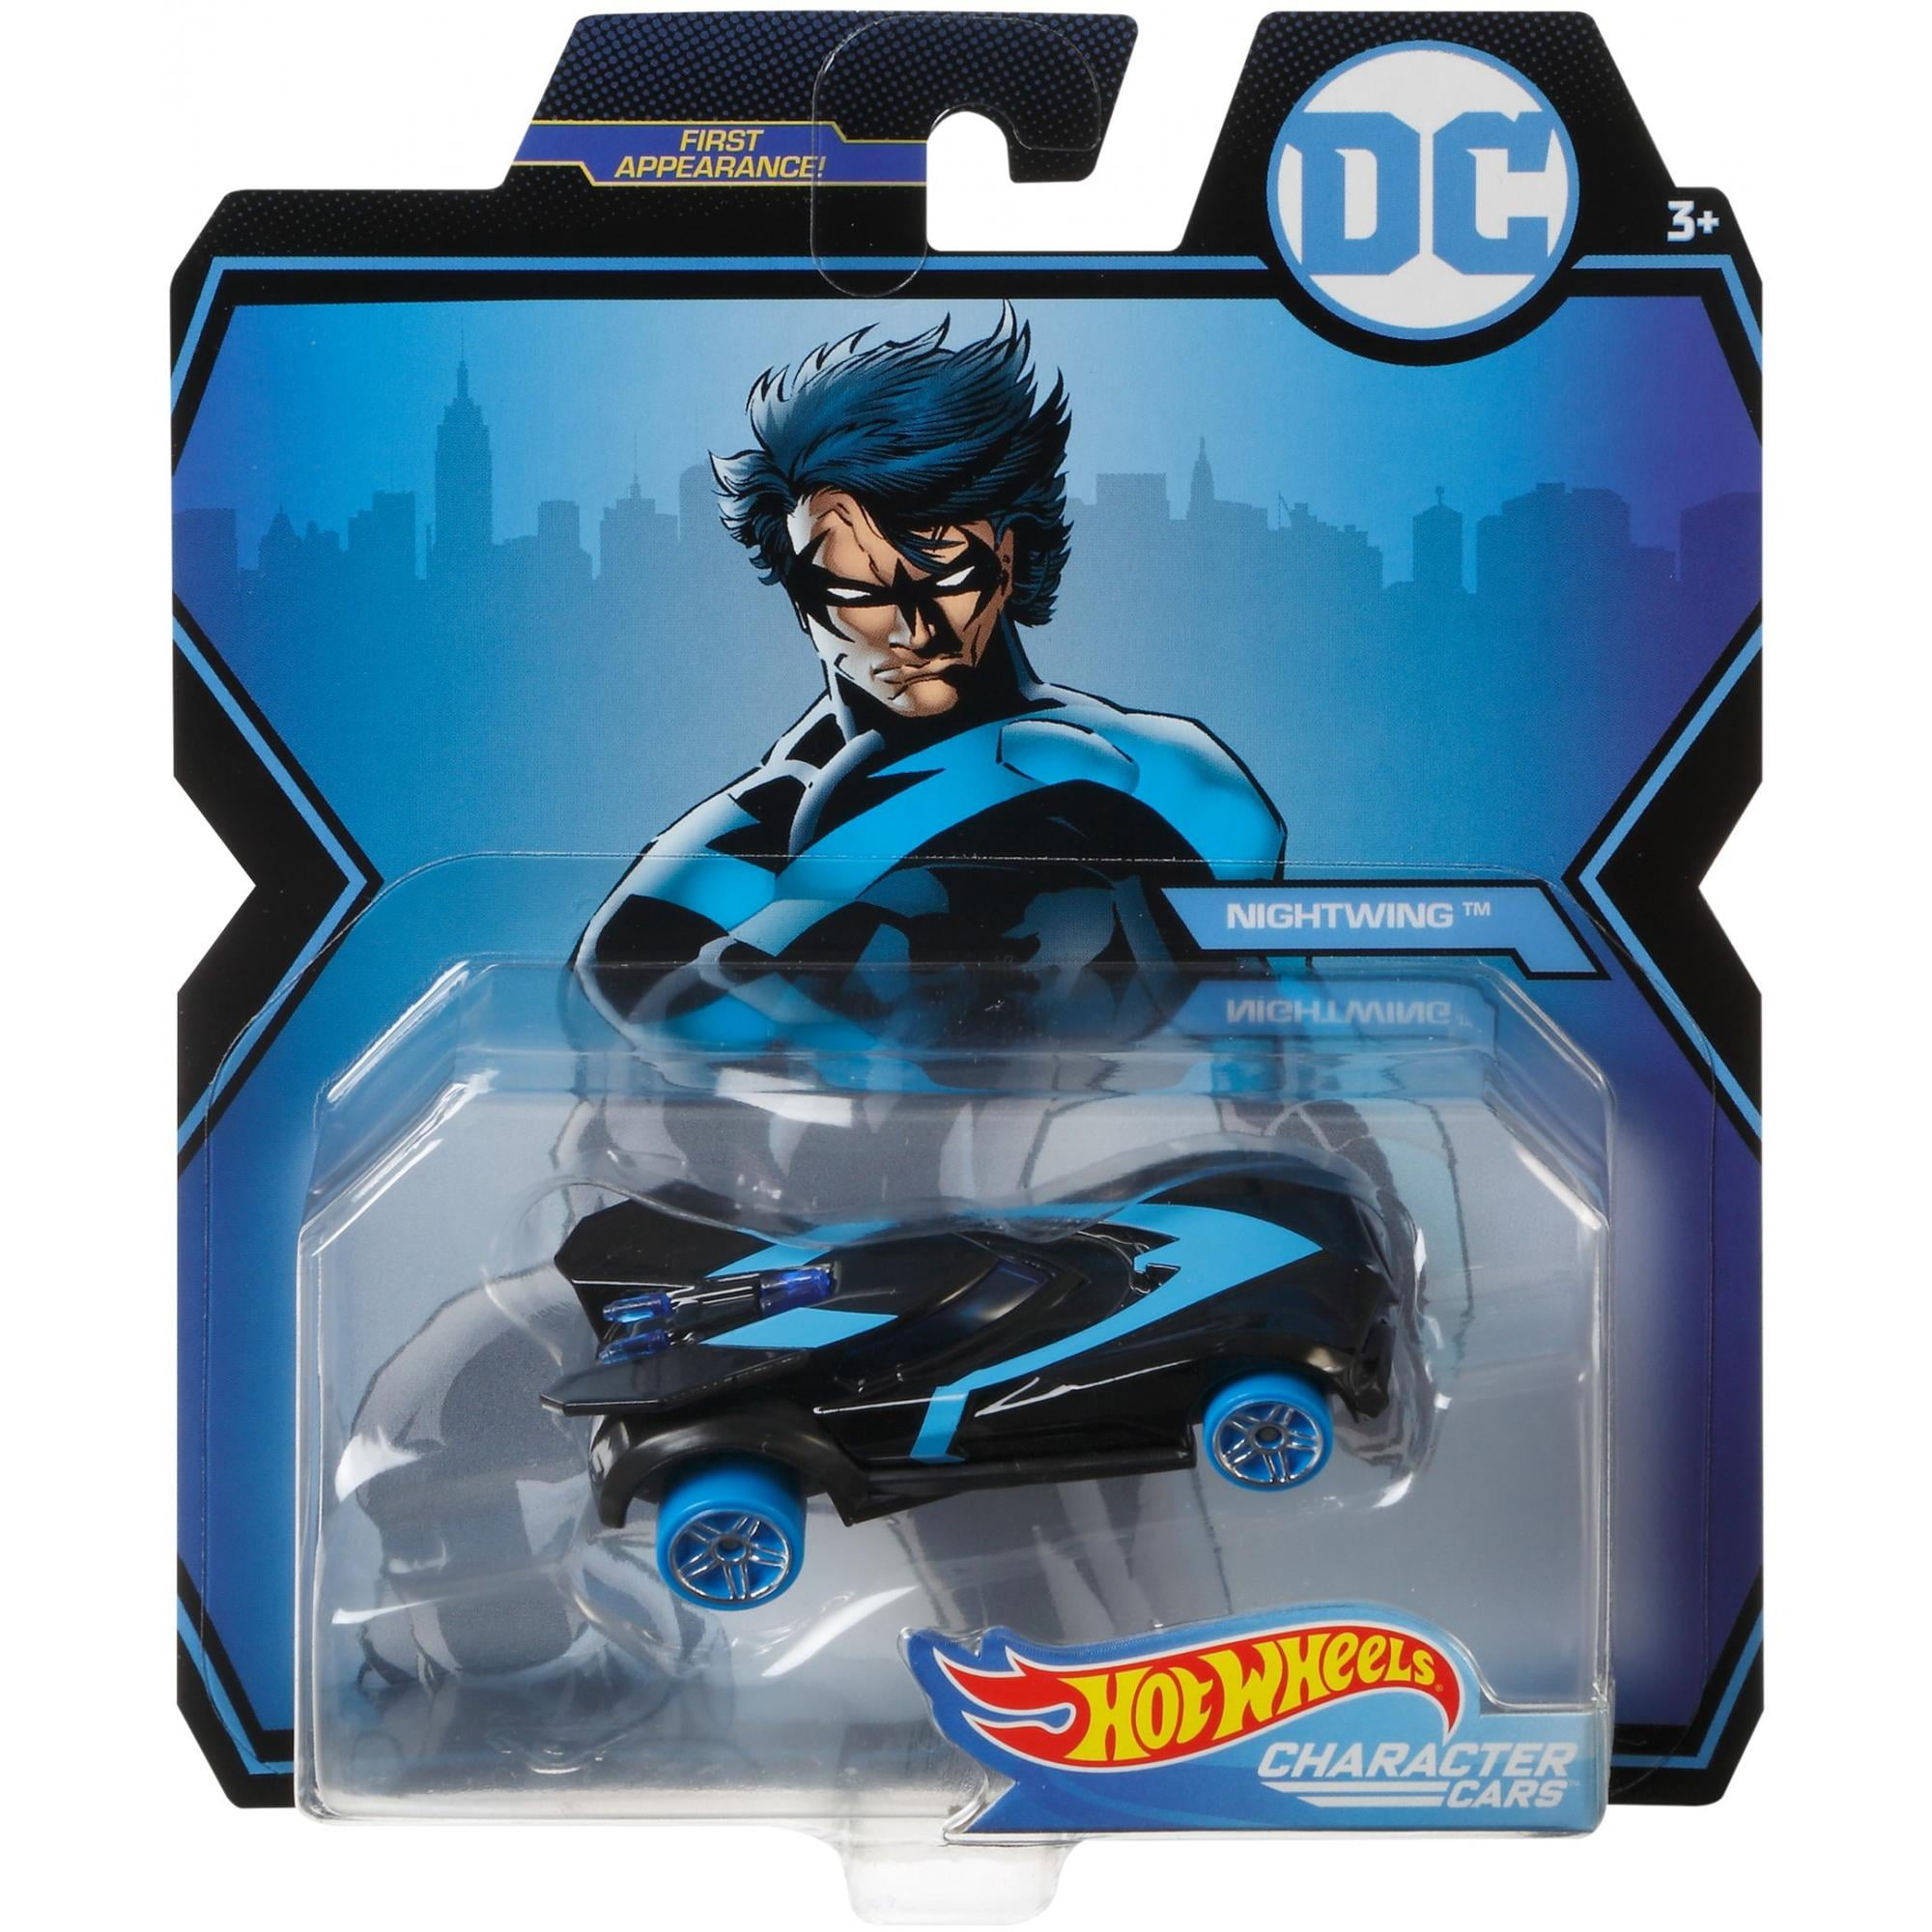 Nightwing 2019 Hot Wheels DC Comics Character Cars Case K